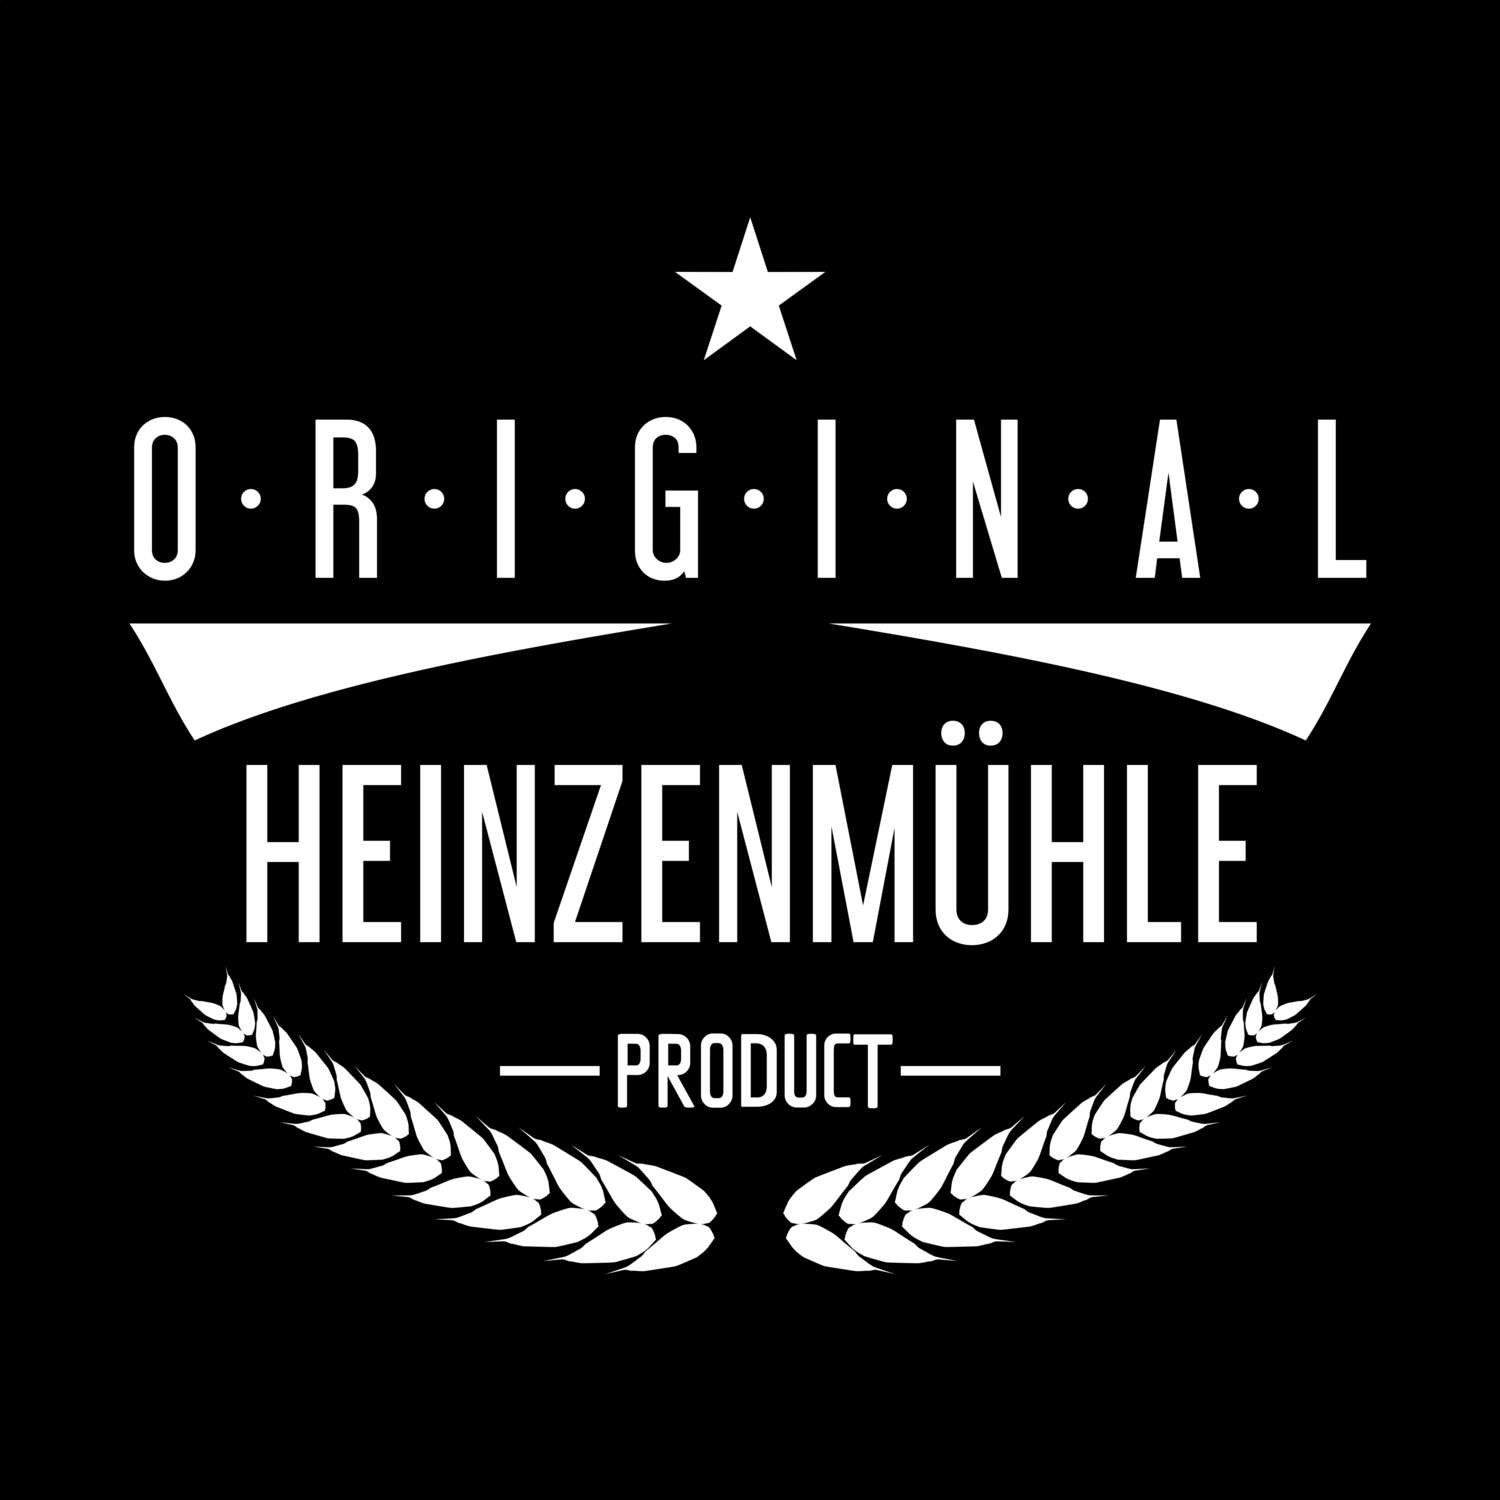 Heinzenmühle T-Shirt »Original Product«